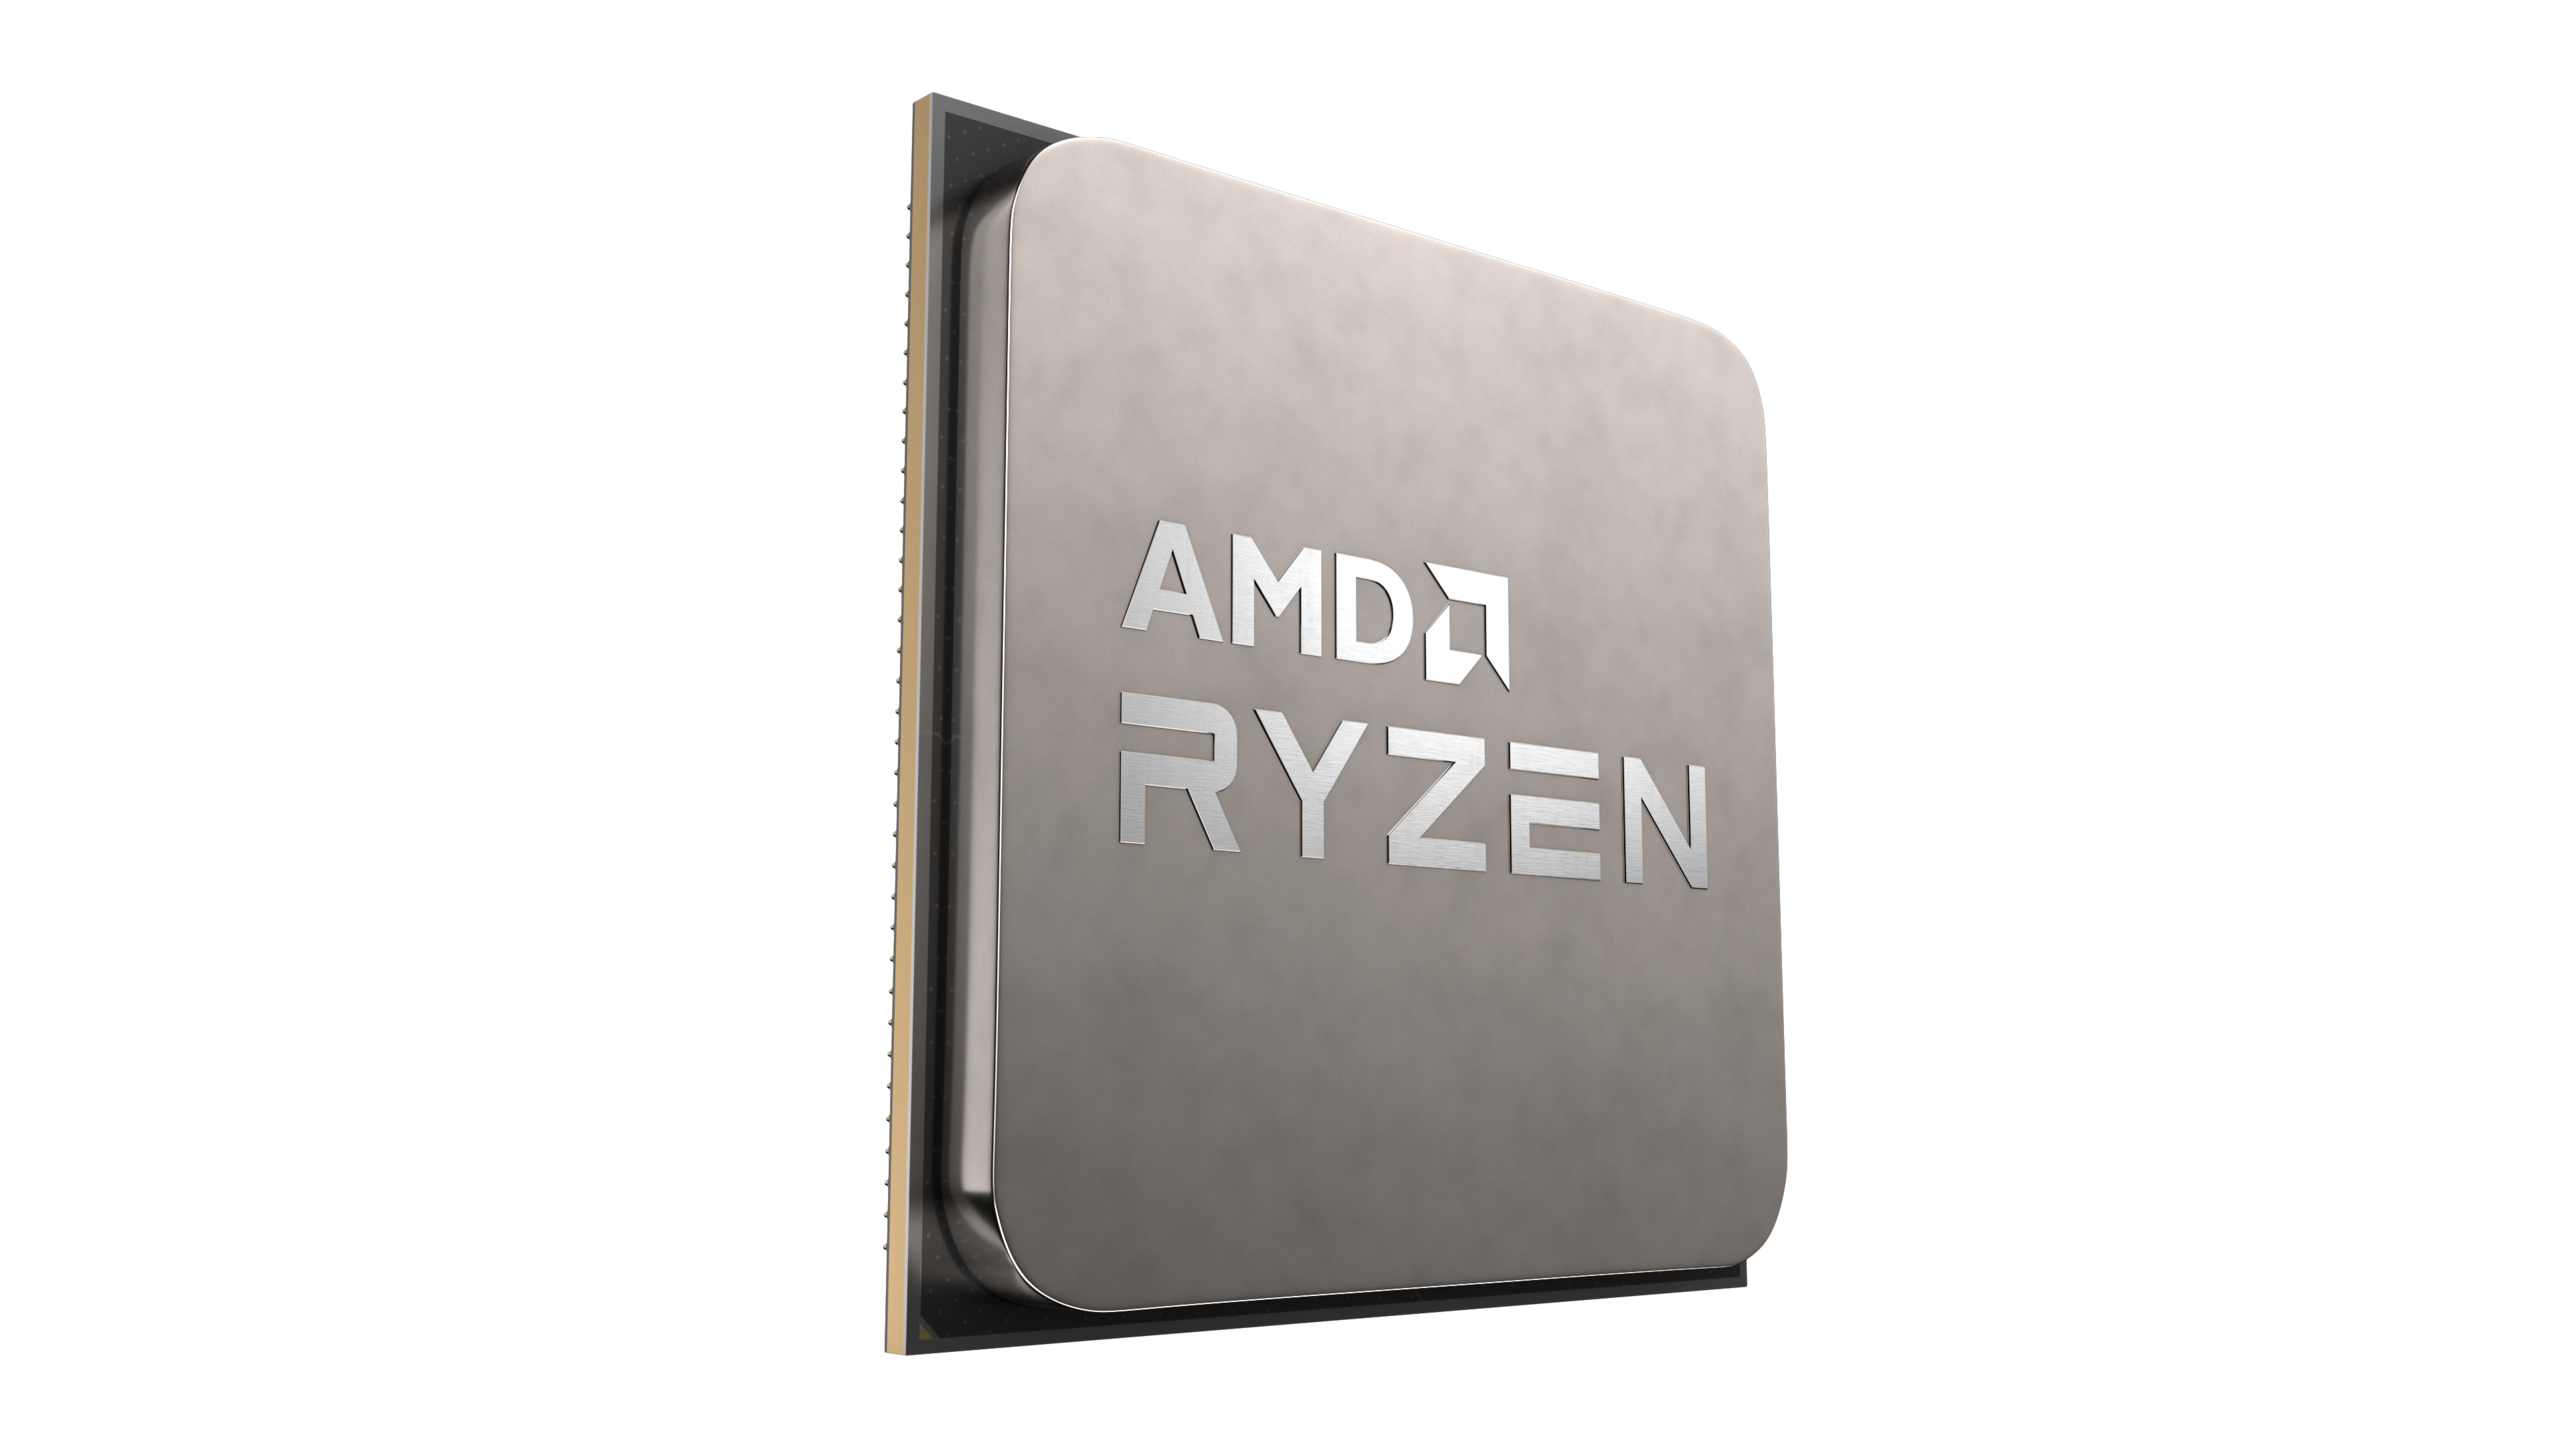 AMD Ryzen 9 5950X tops PassMark's single-threaded chart 